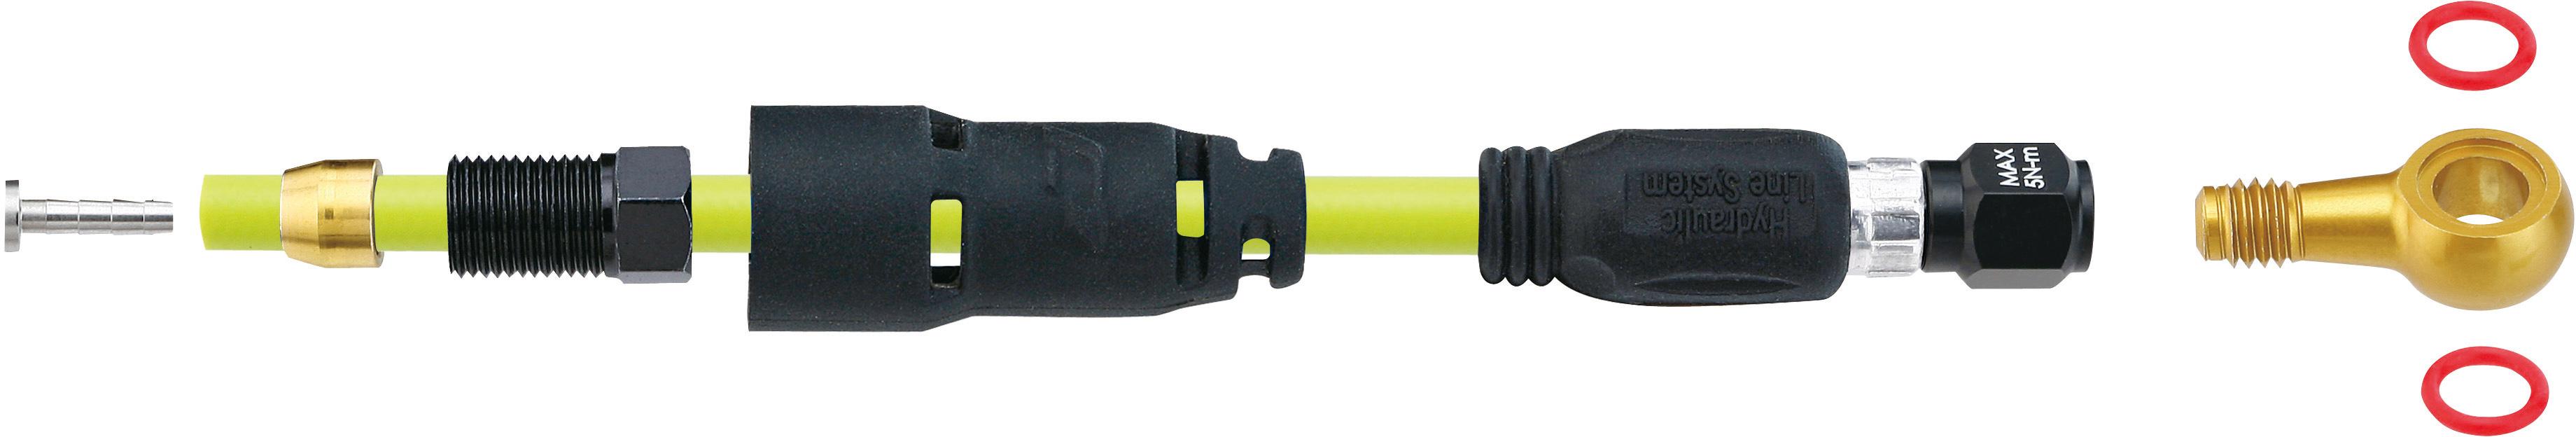 Bosch Pocket Screwdriver Set - One Size Black/green  Tool Sets